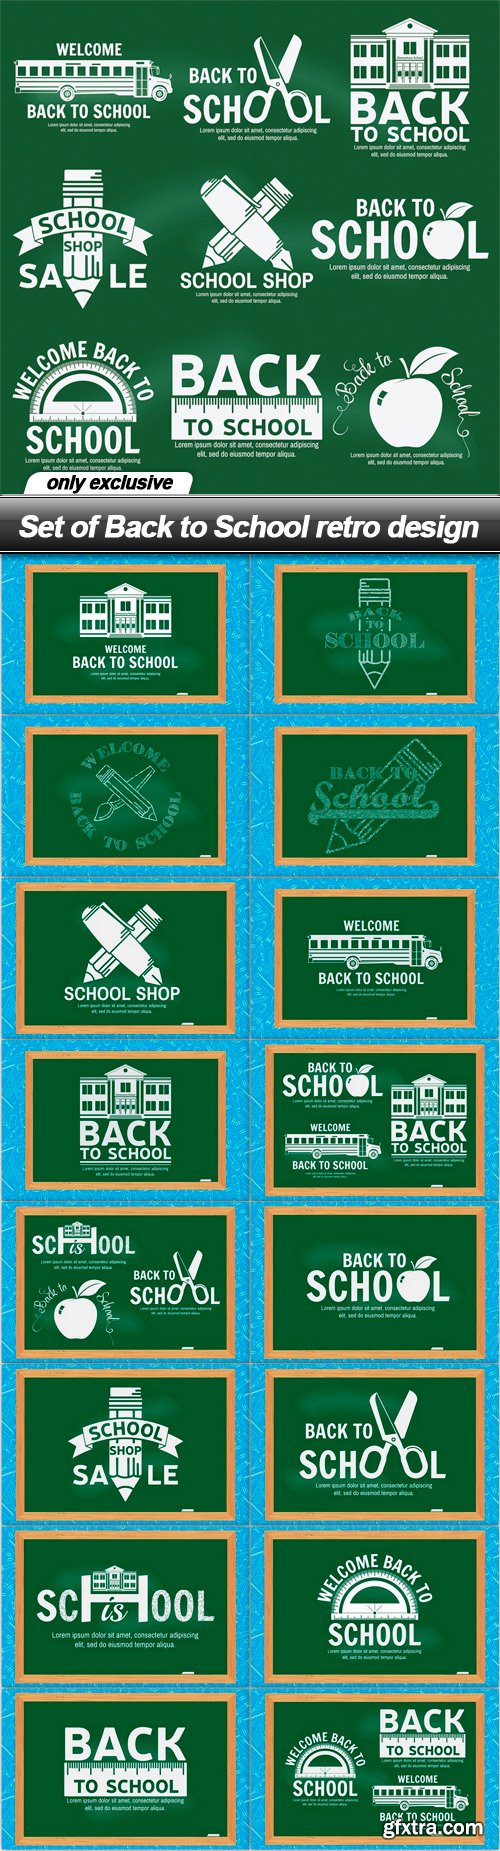 Set of Back to School retro design - 17 EPS